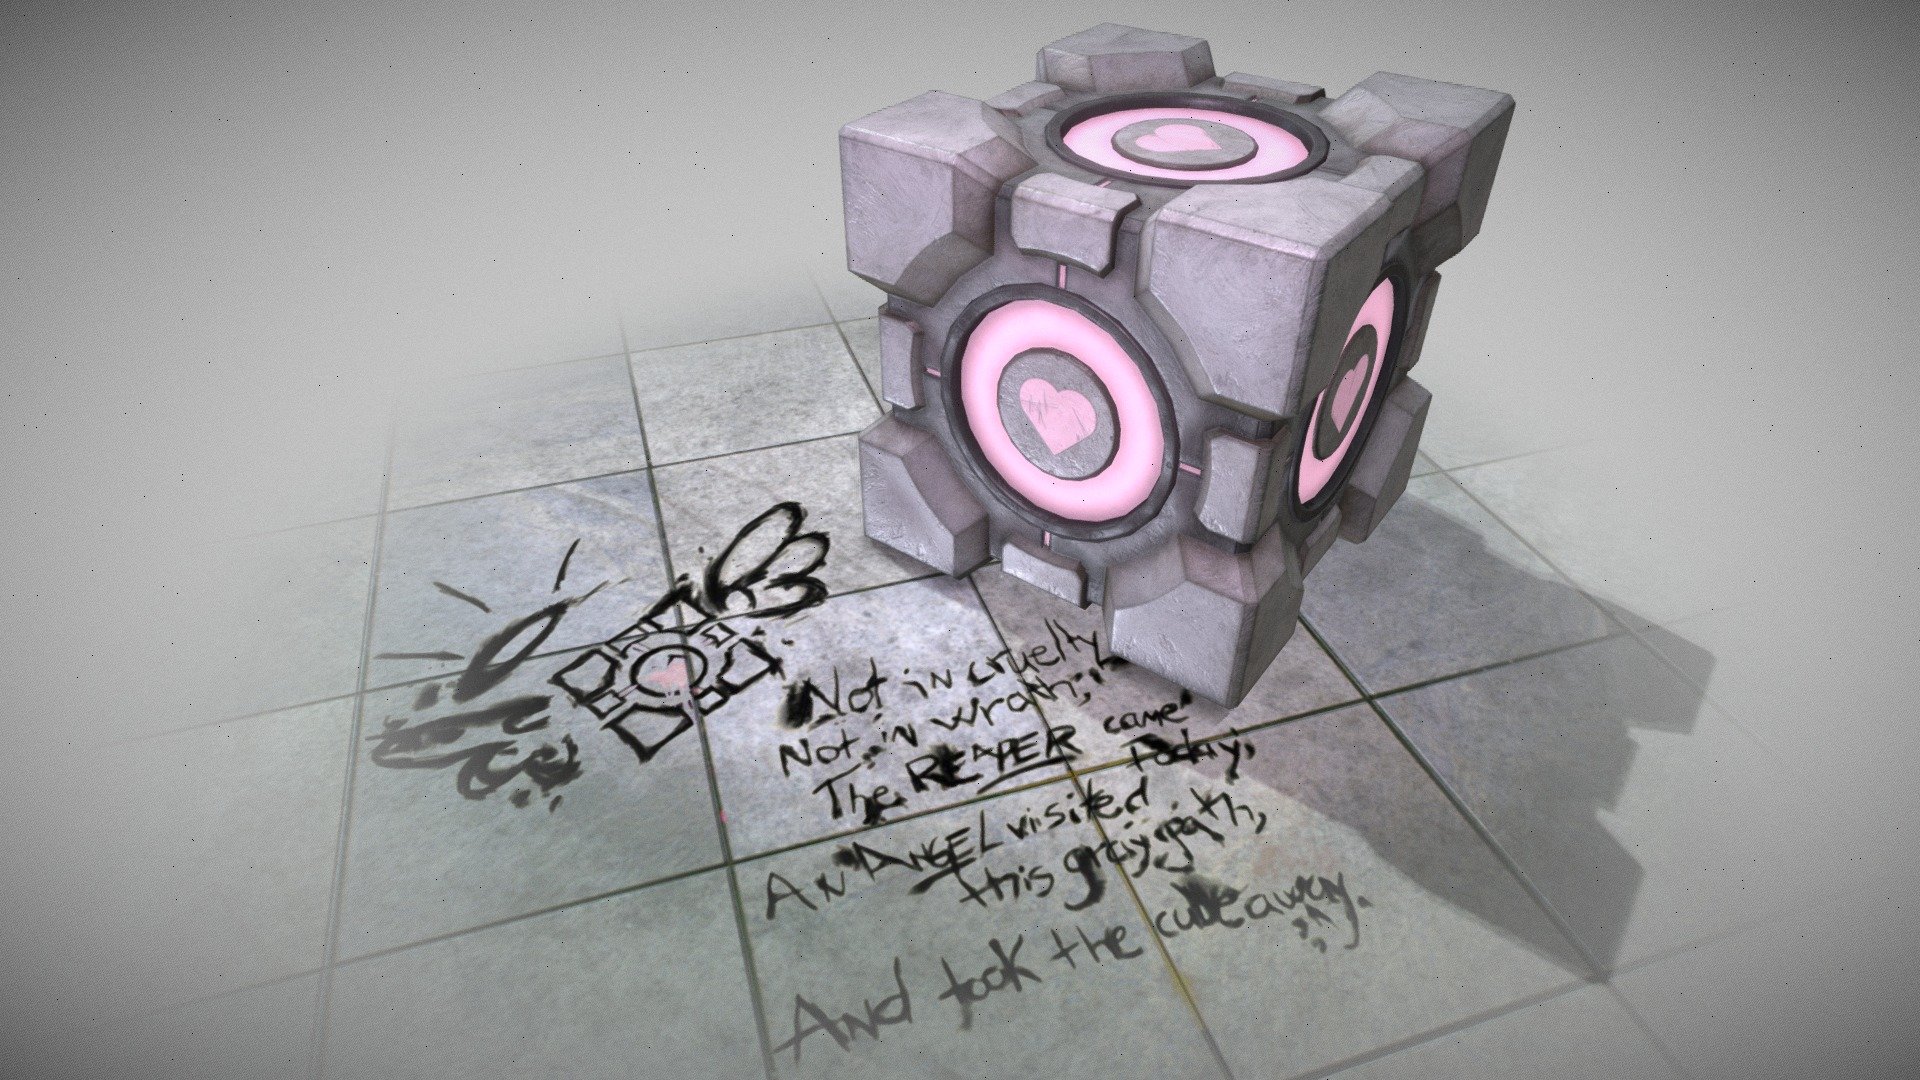 ArtStation - Portal Companion Cube